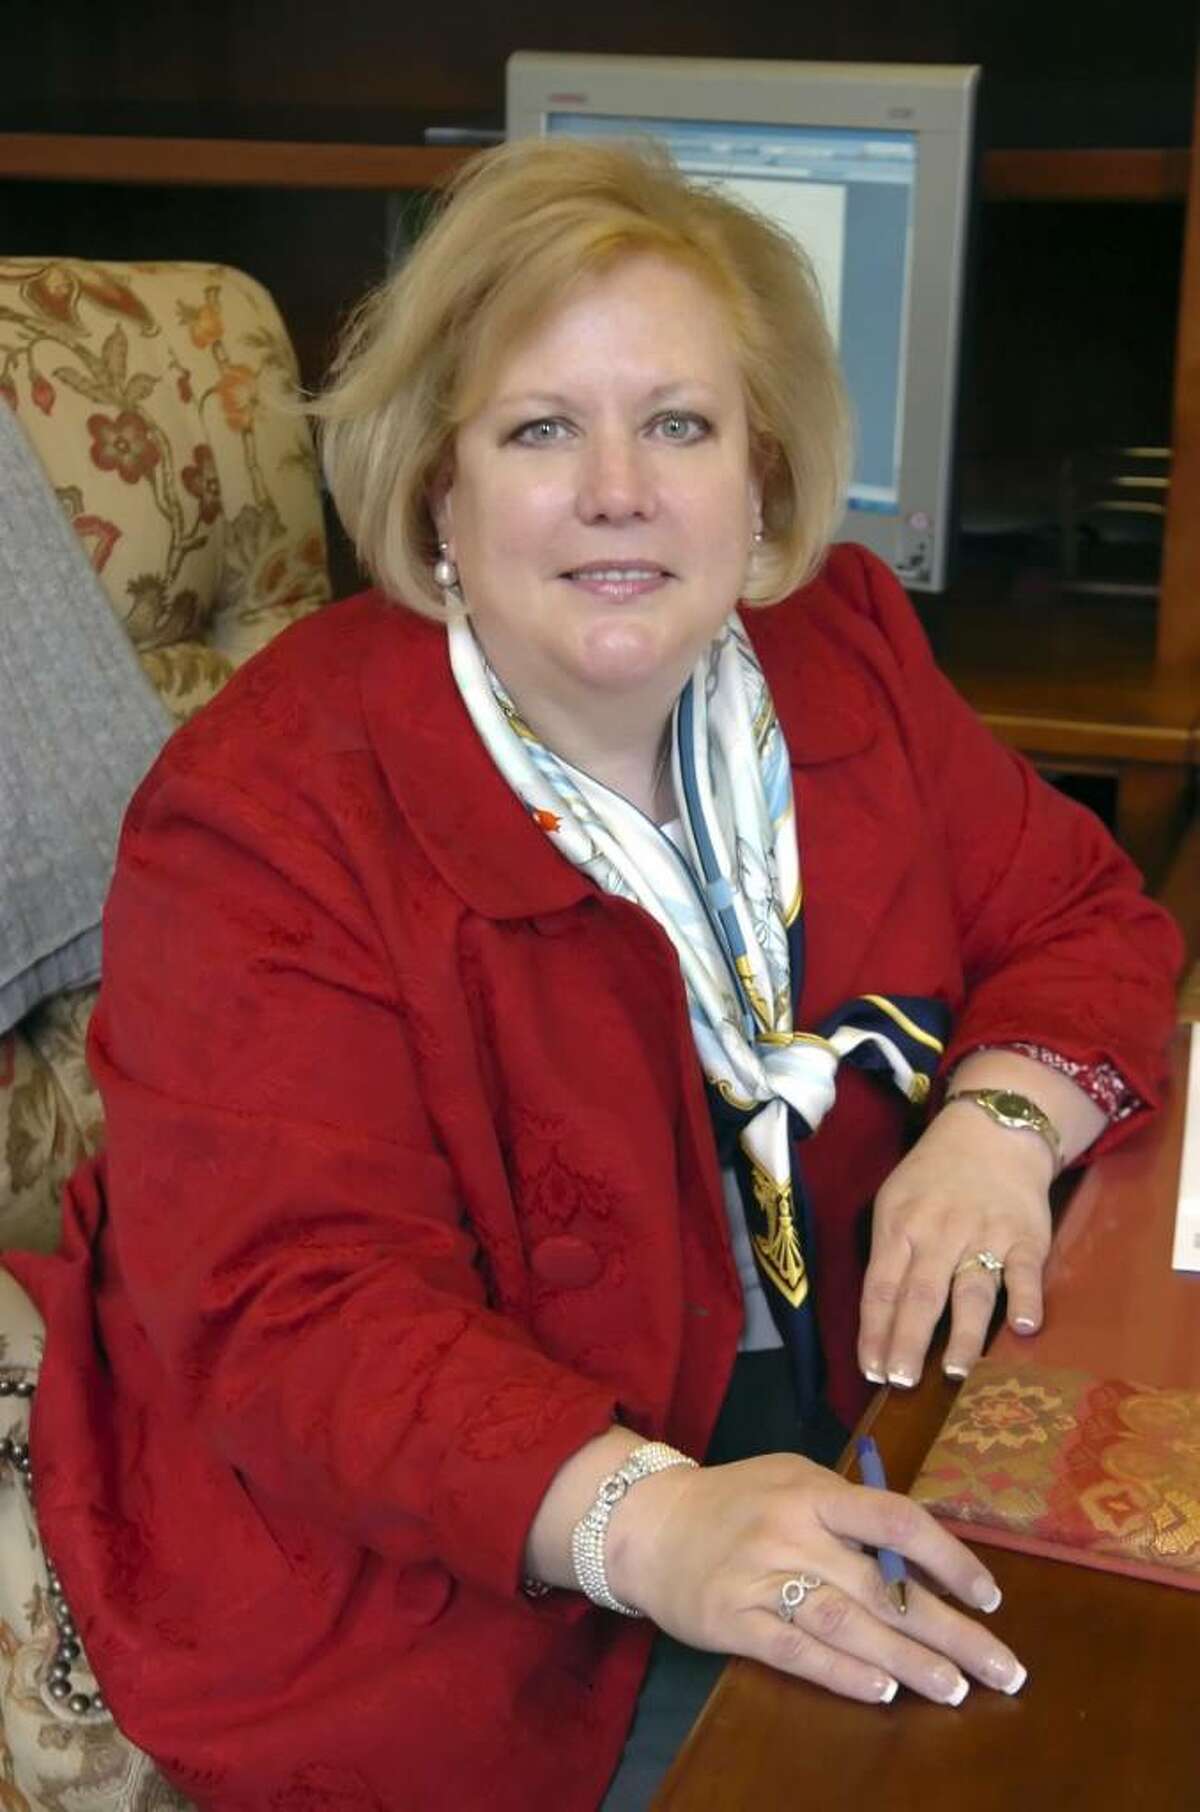 Deputy Superintendent of Schools Ellen Flanagan made $177,963.05 in 2009.